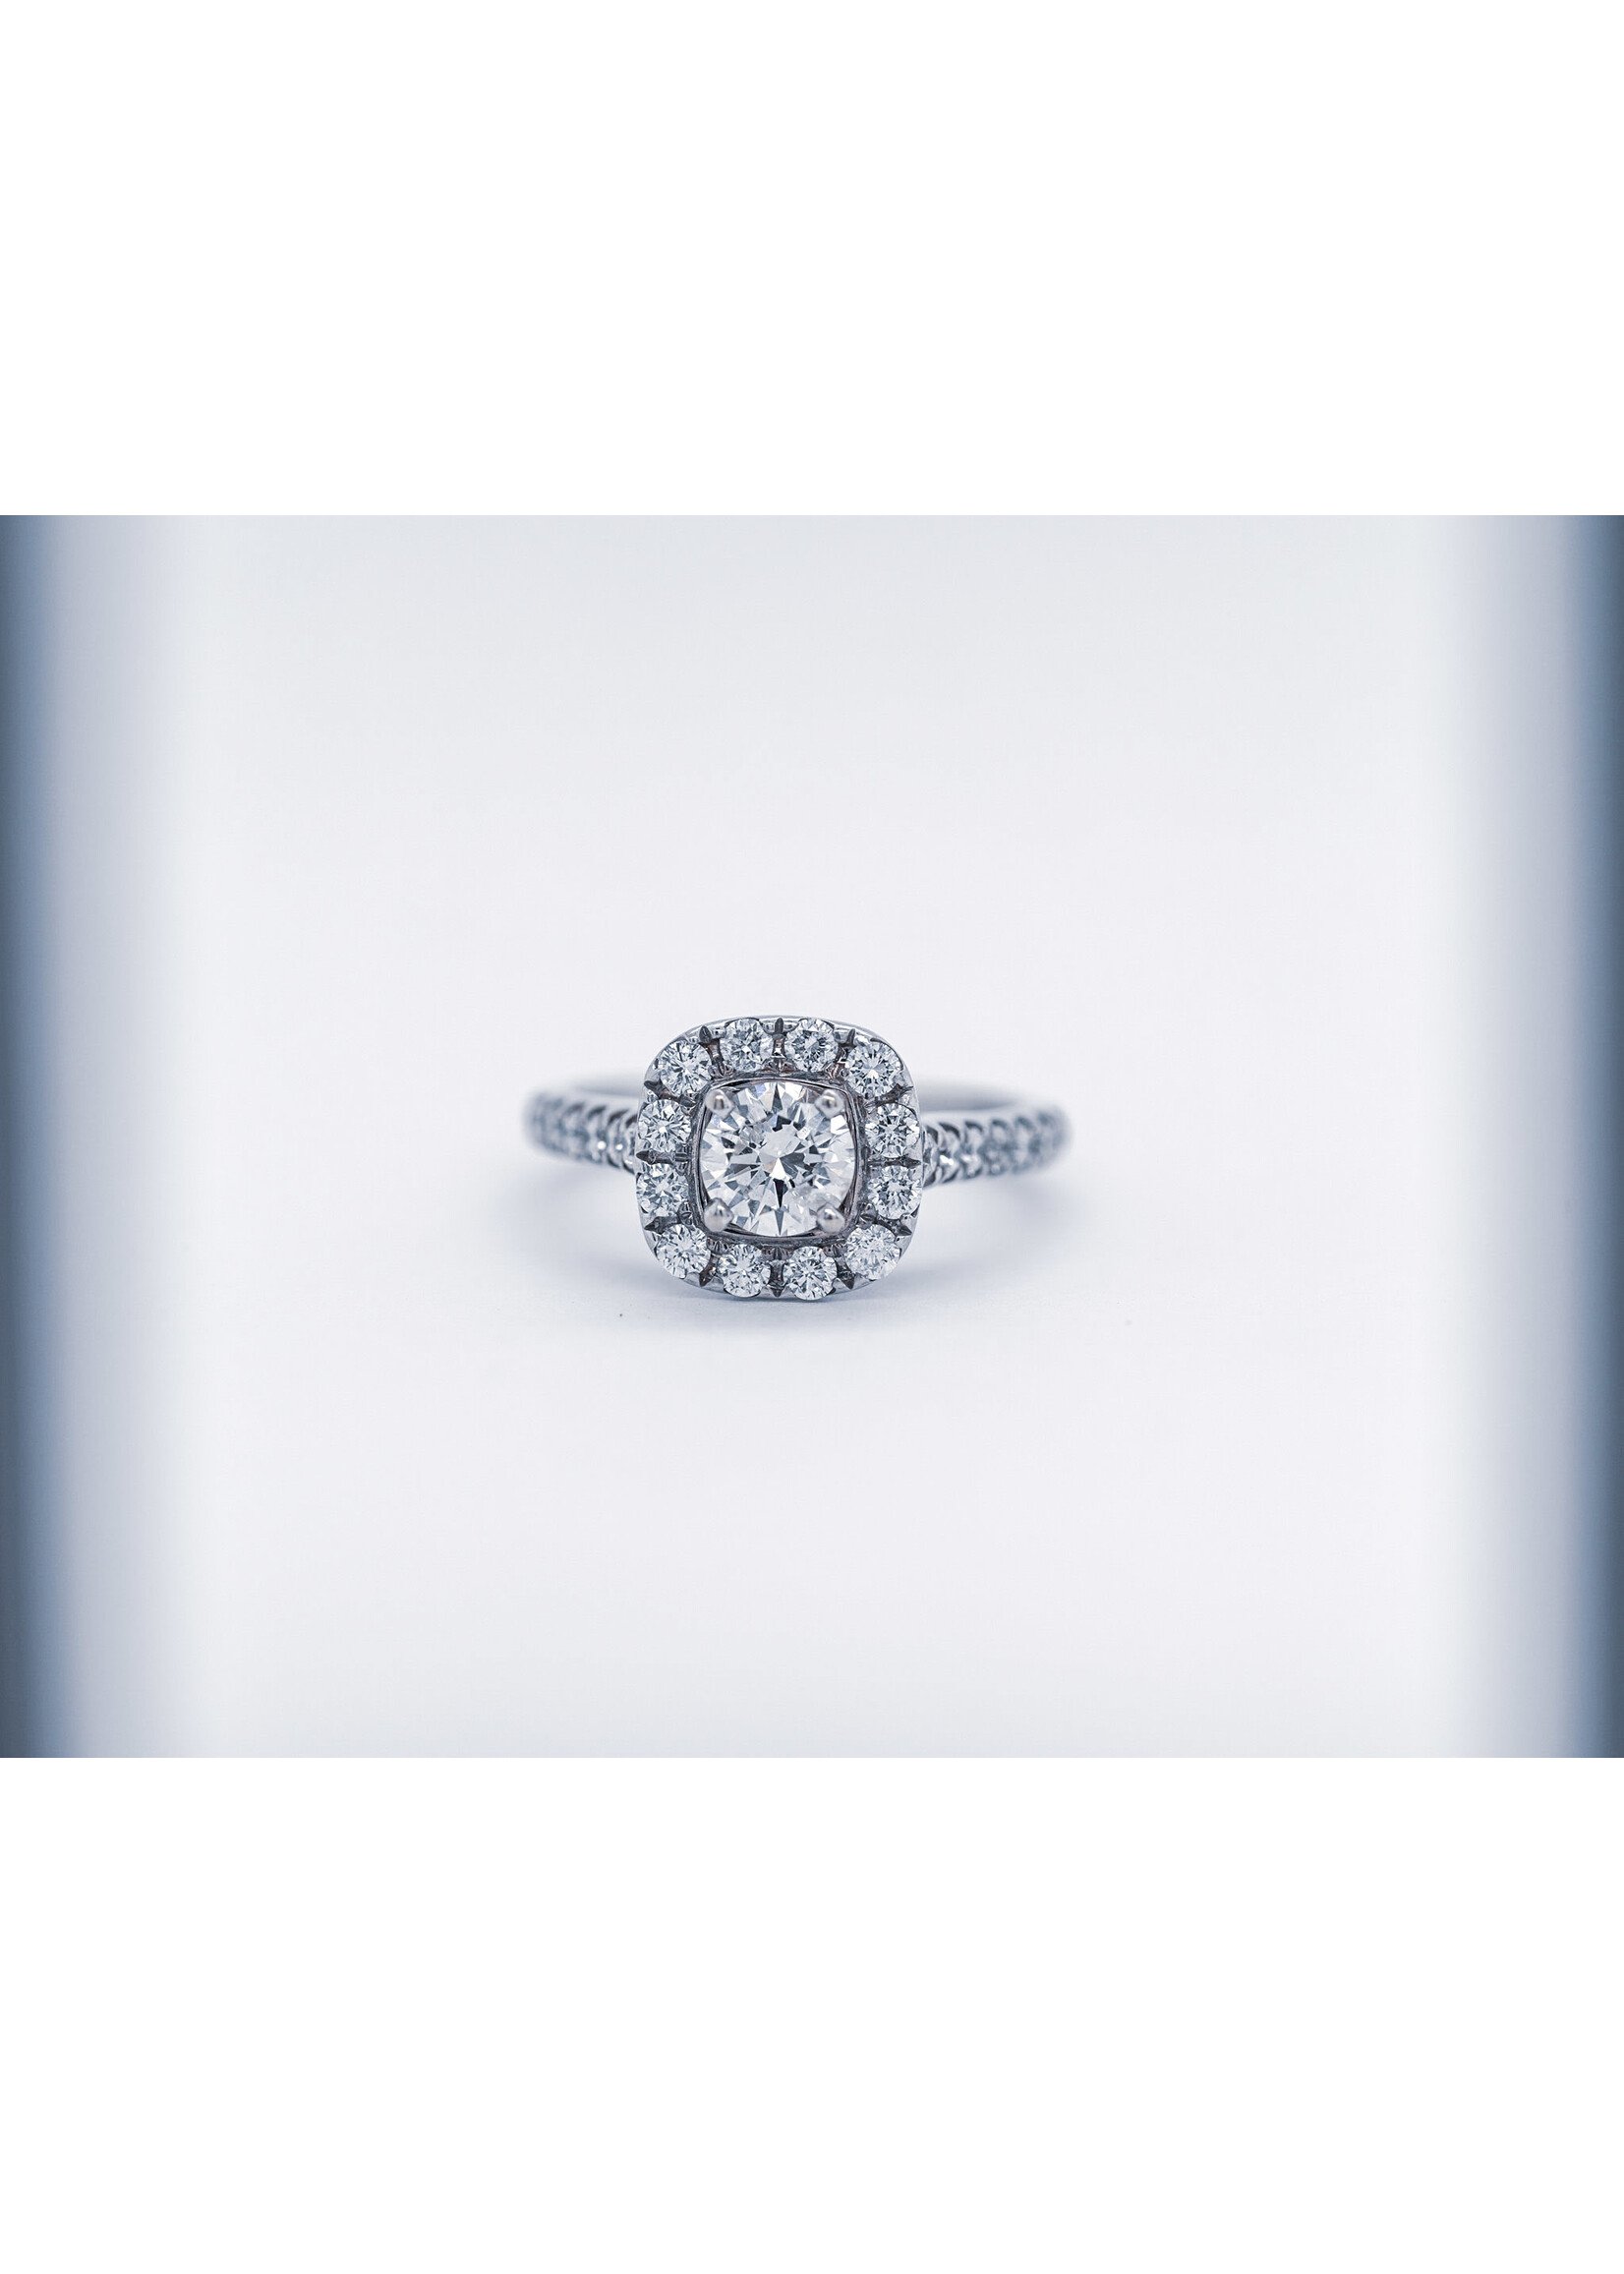 14KW 4.03g 1.50TW (.55ctr) H/I1 Round Diamond Neil Lane Engagement Ring (size 5)